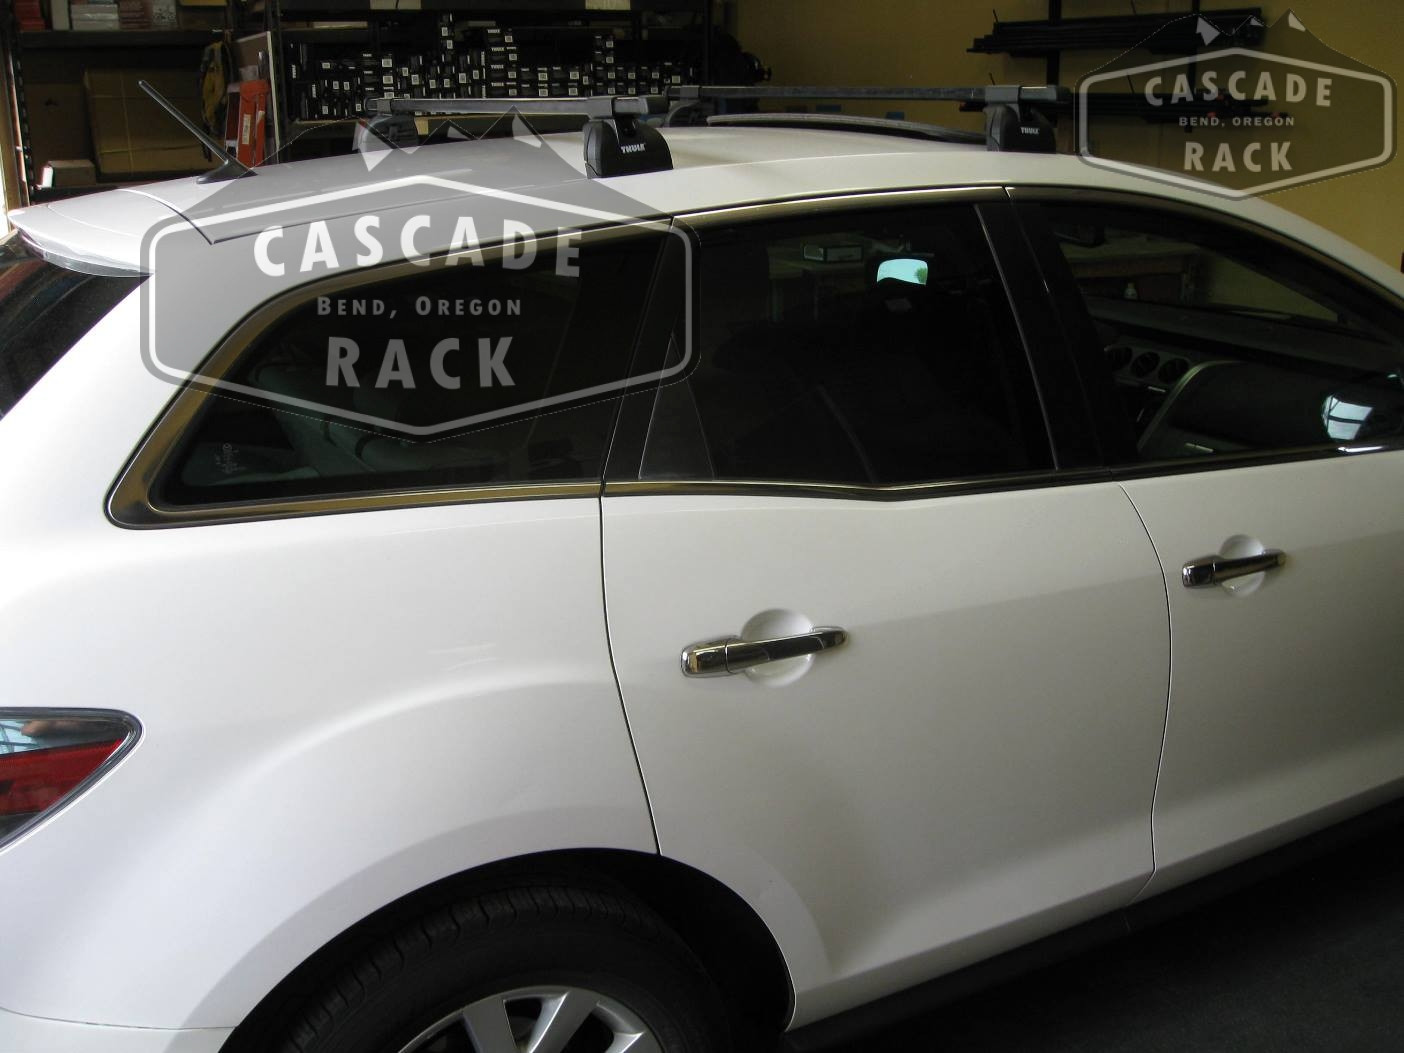 2012 Mazda CX-7 - Base Rack Installation - Thule